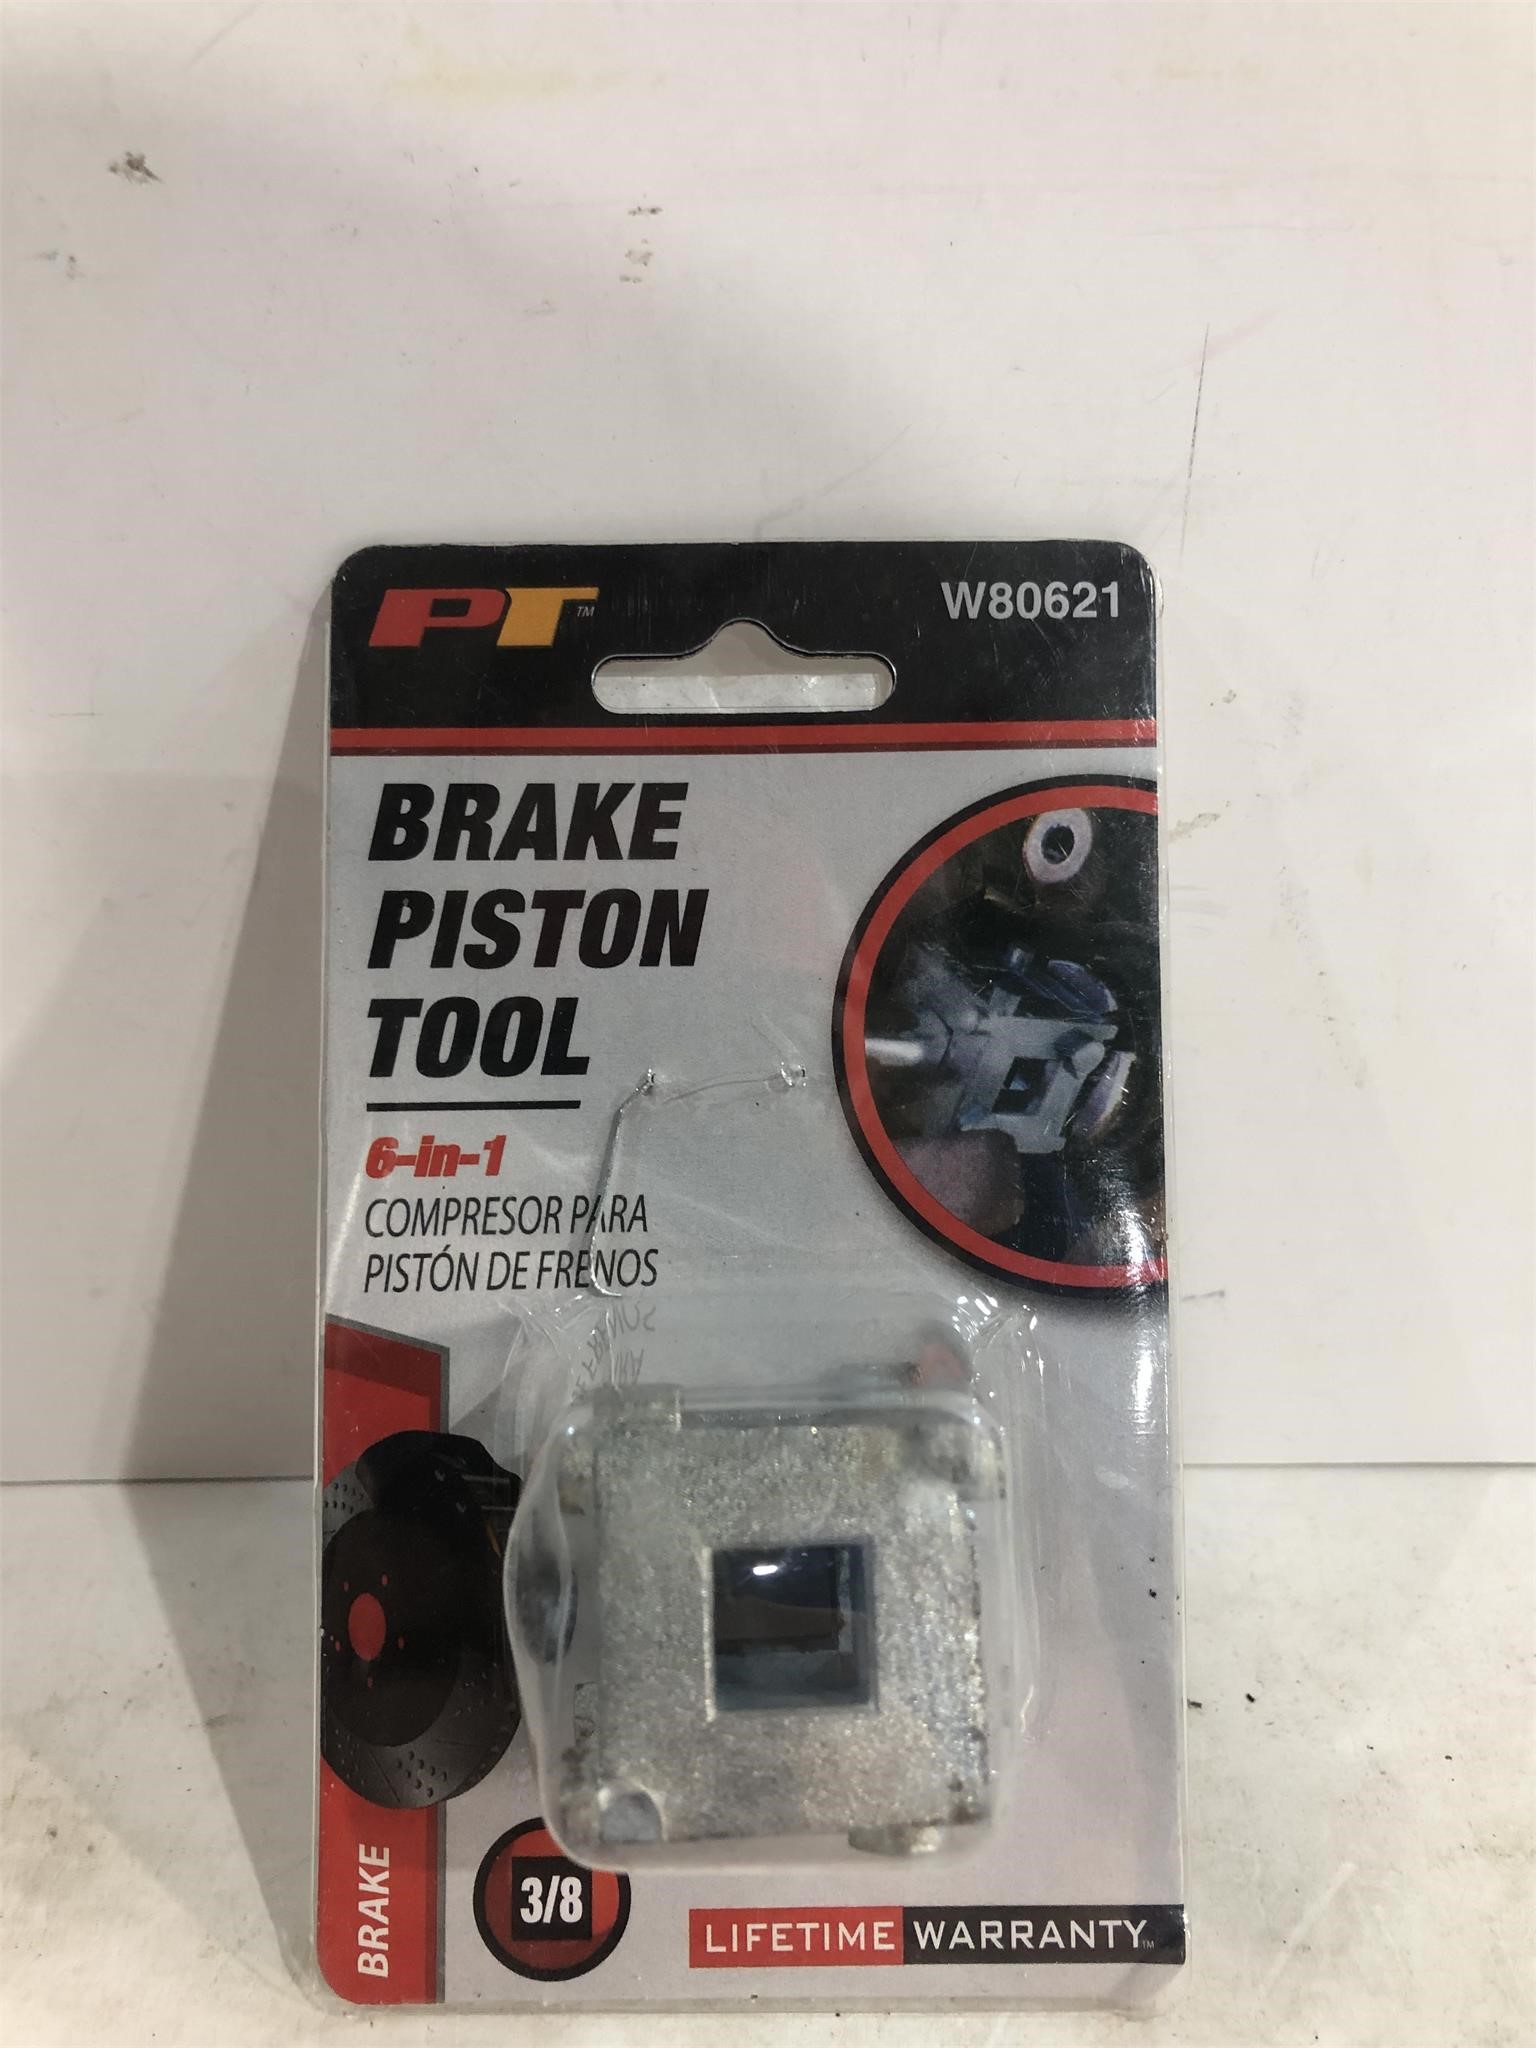 Break Piston Tool 6n1